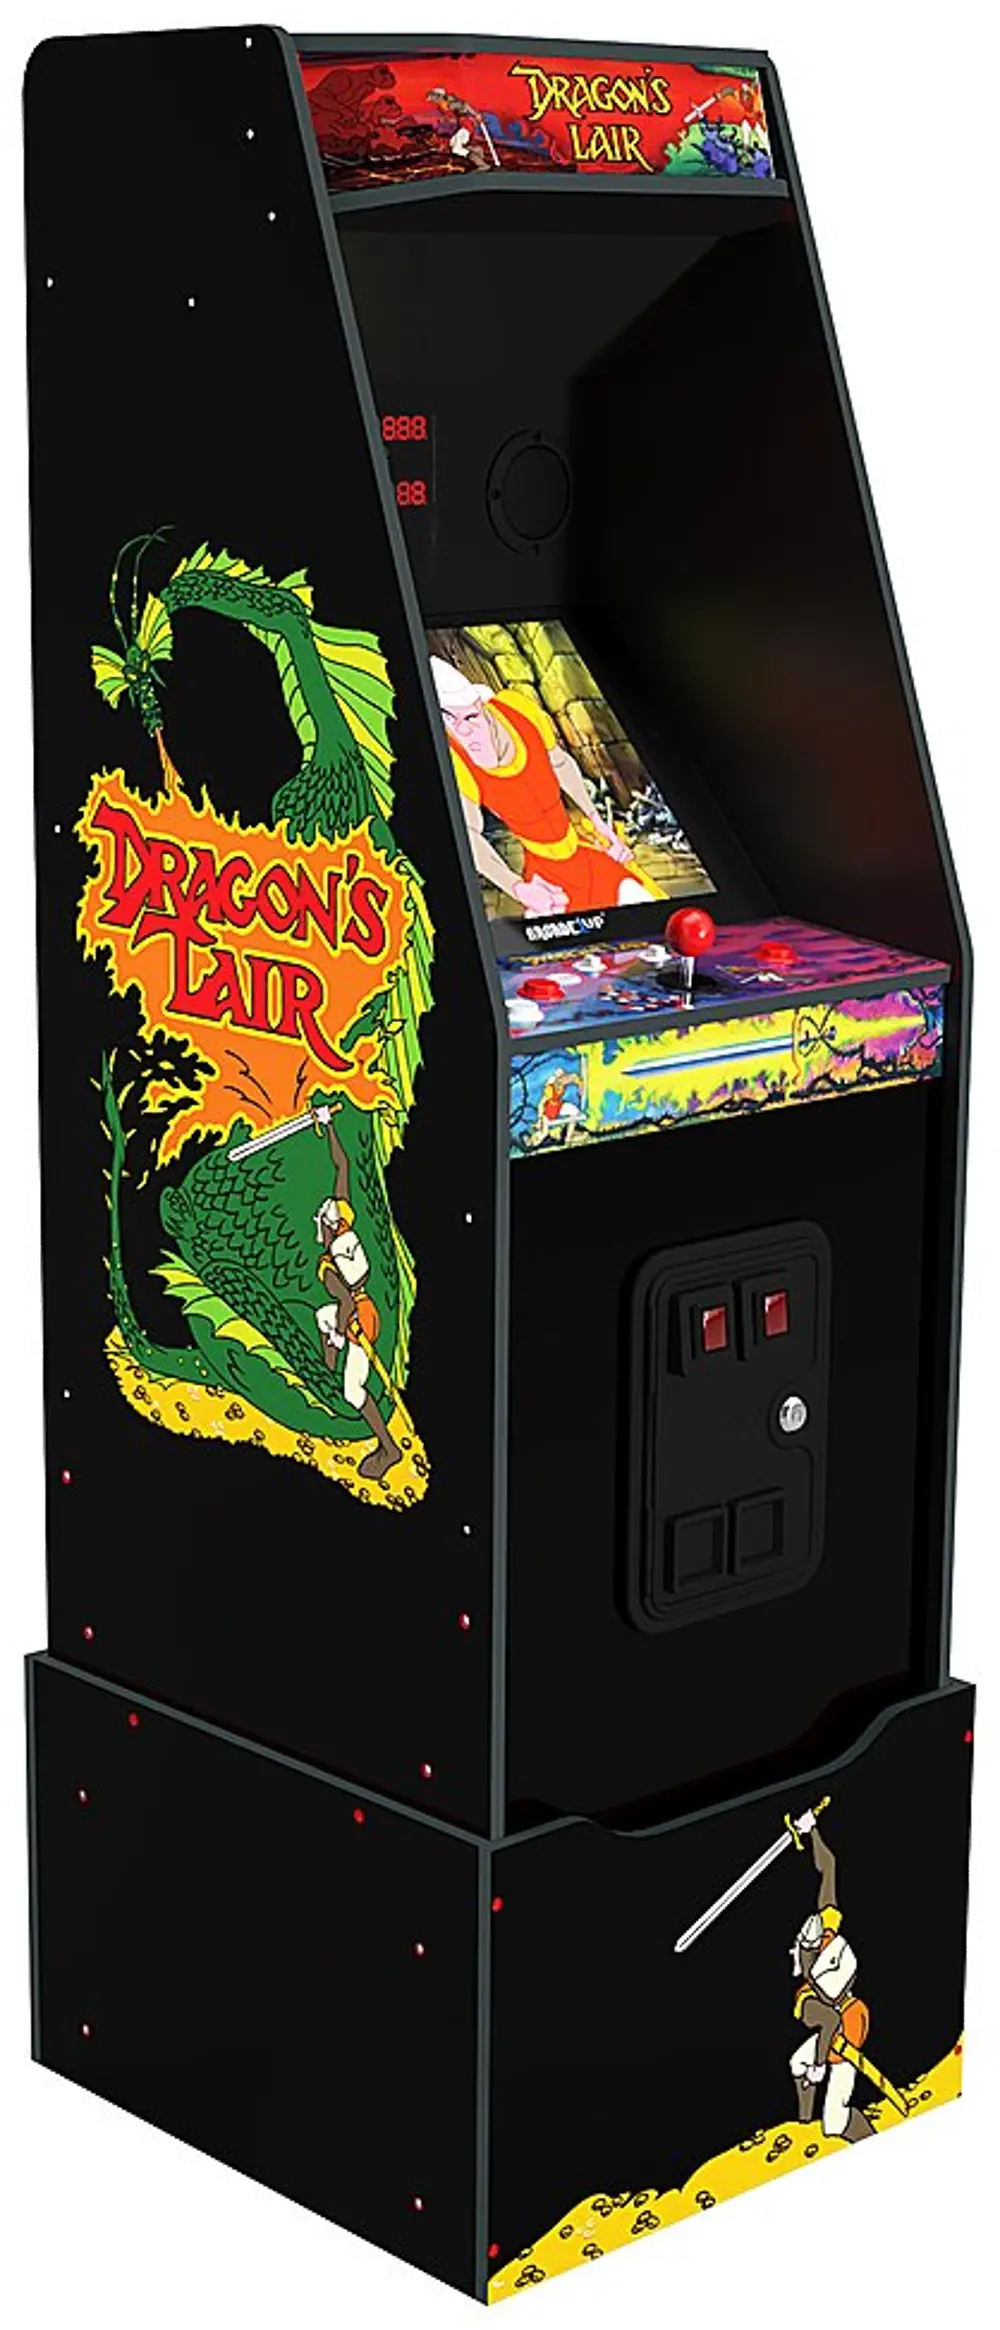 UPRIGHT/DRAGONS_LAIR Arcade1Up Dragon's Lair Arcade-1